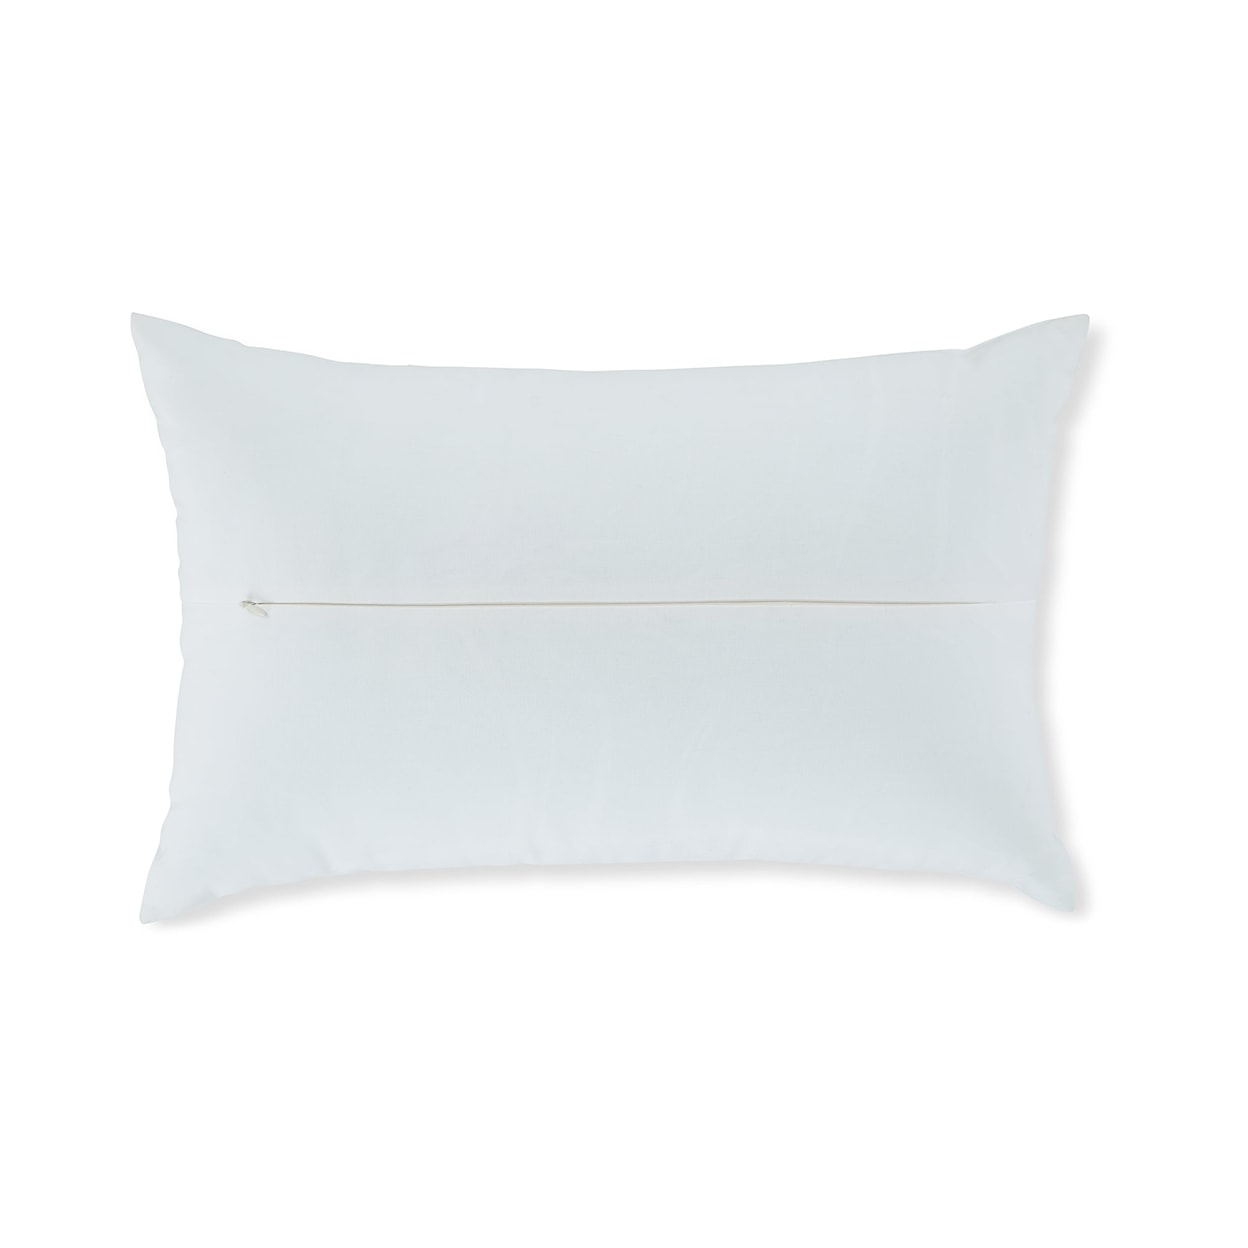 Ashley Signature Design Tannerton Pillow (Set of 4)